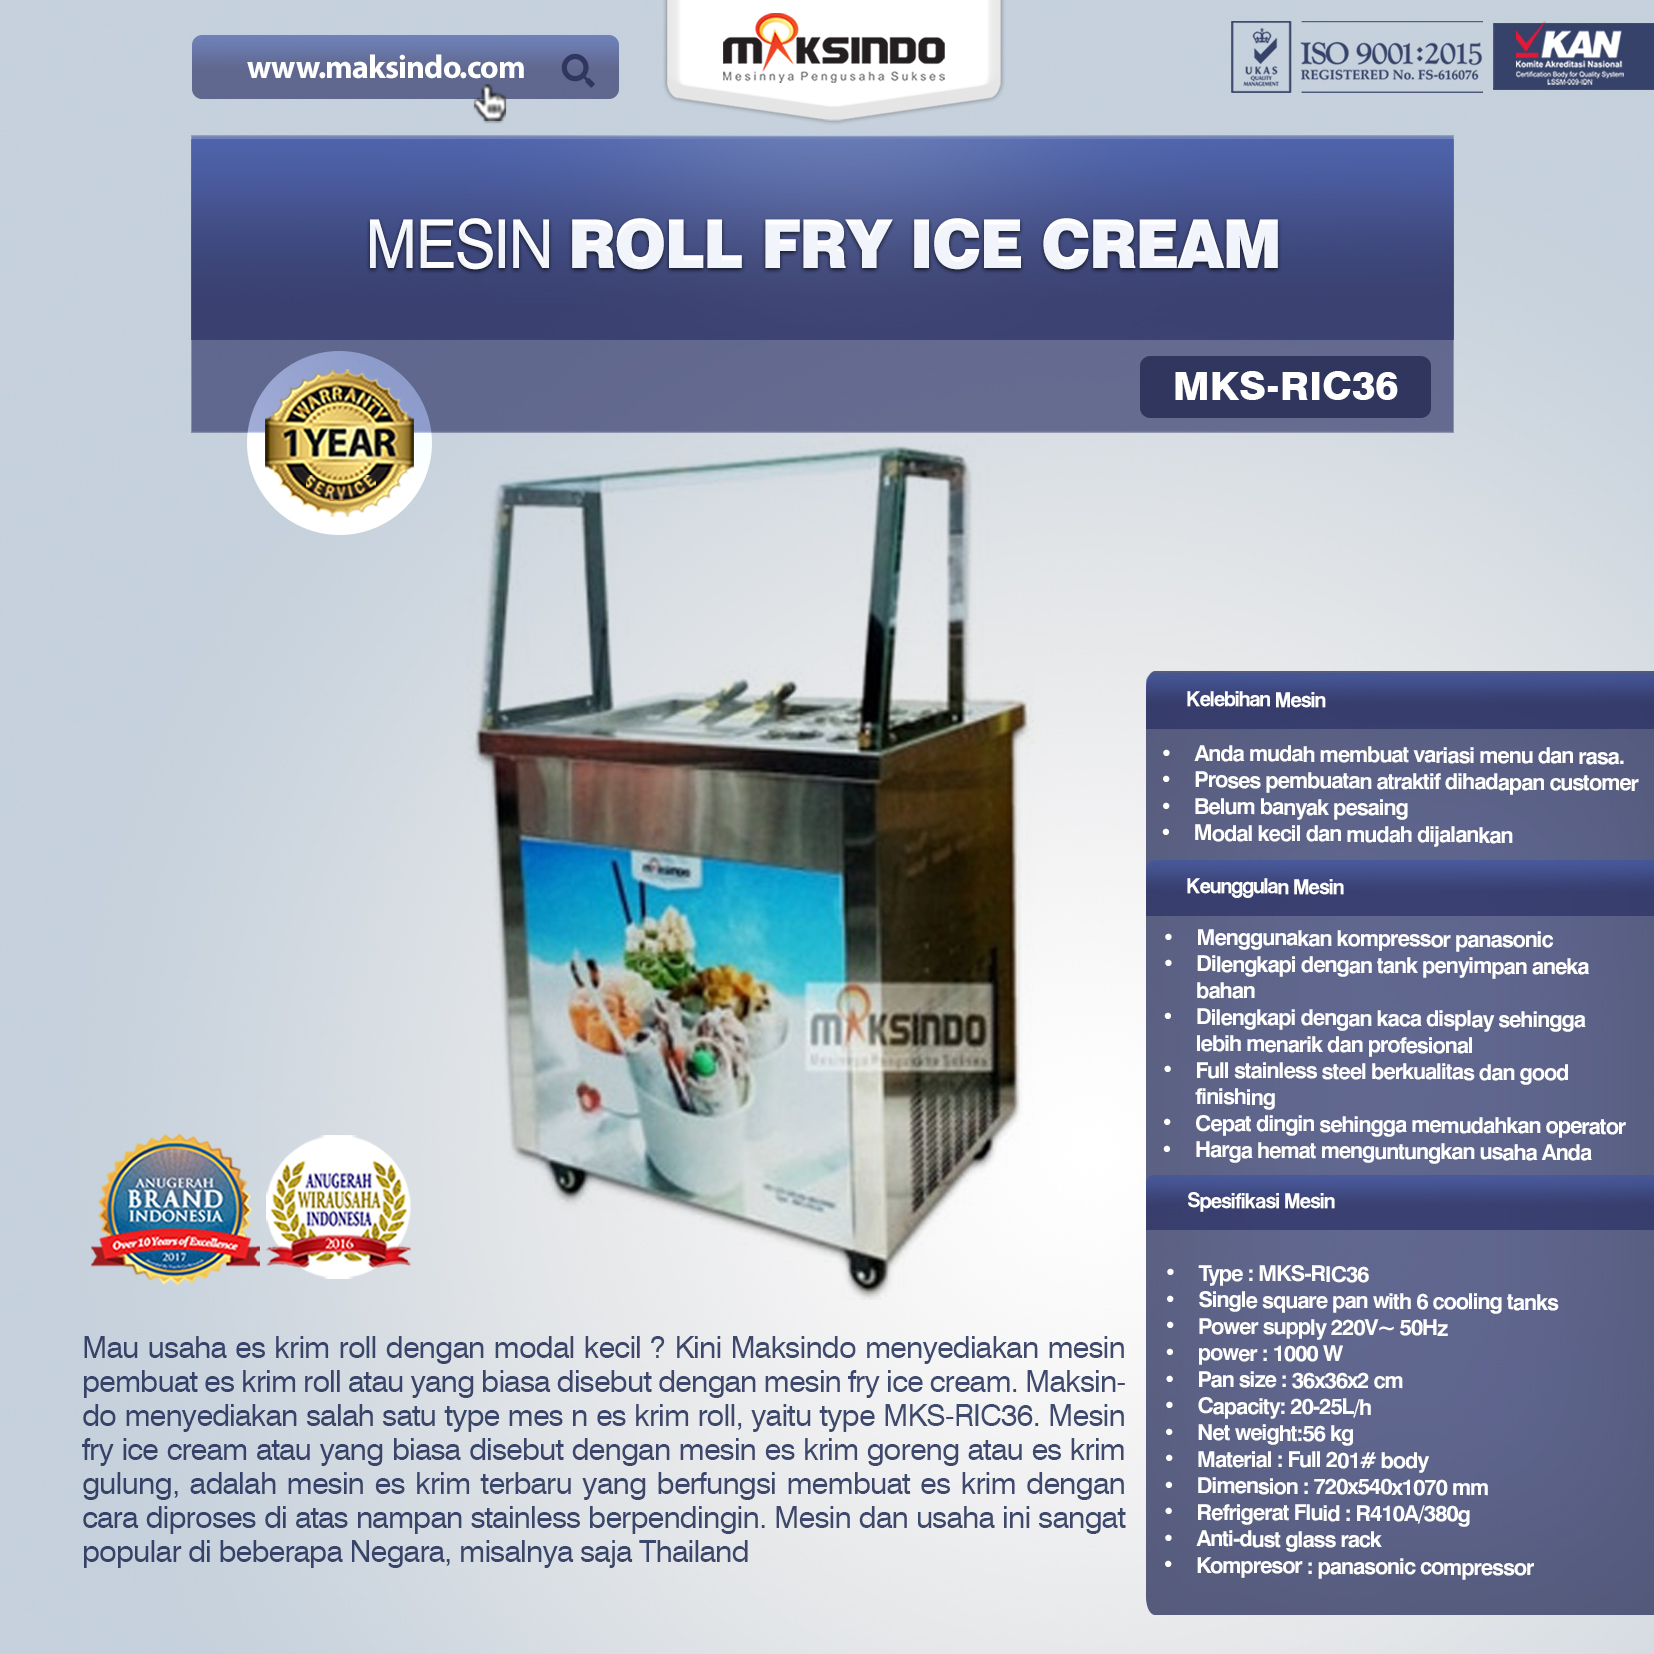 Jual Mesin Roll Fry Ice Cream (RIC36) di Bekasi